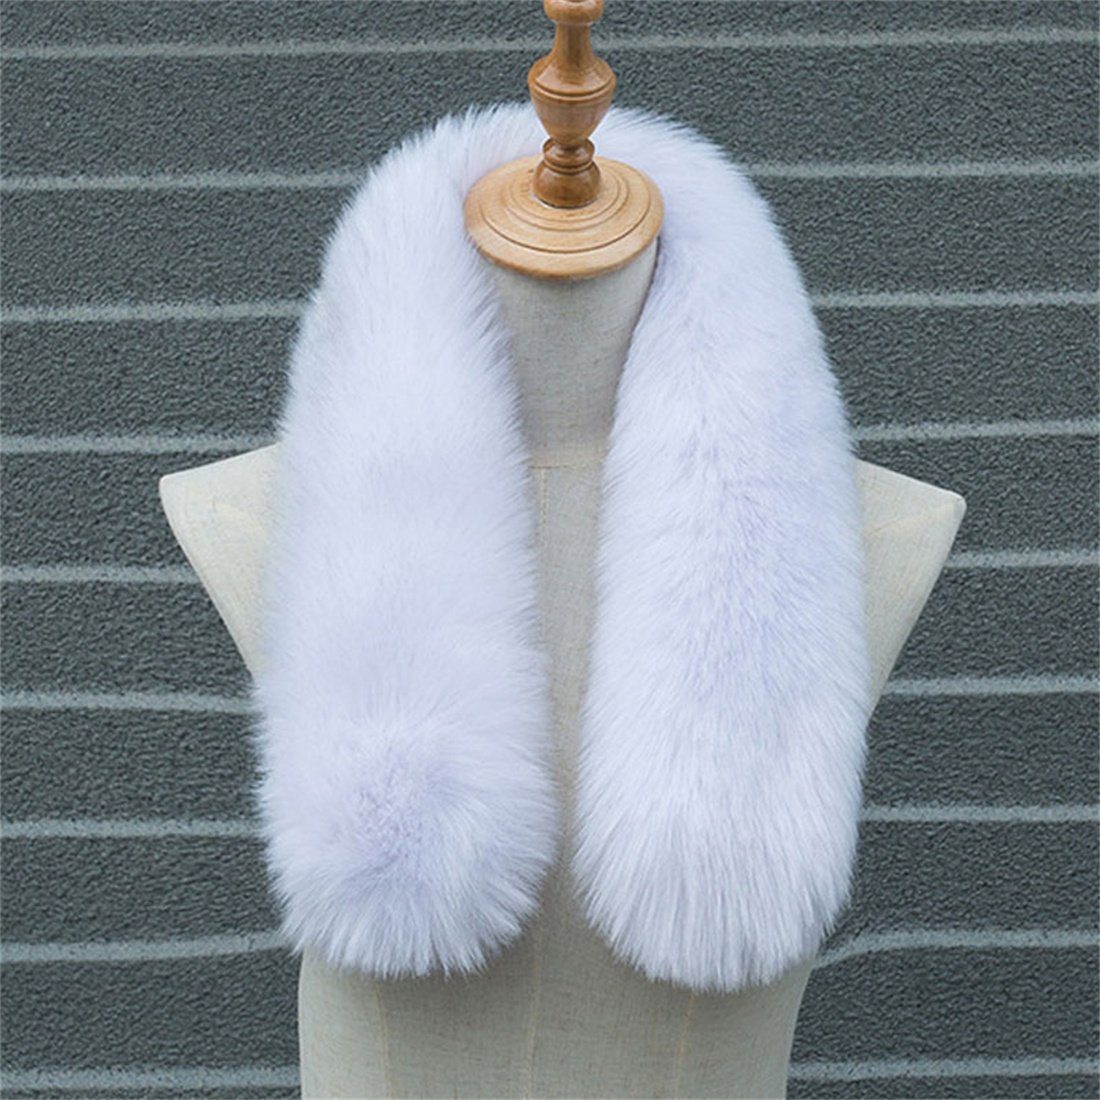 DÖRÖY Modeschal Damen Winter warm verdickt Plüsch Schal,Nachahmung Pelz einfarbigSchal weiß